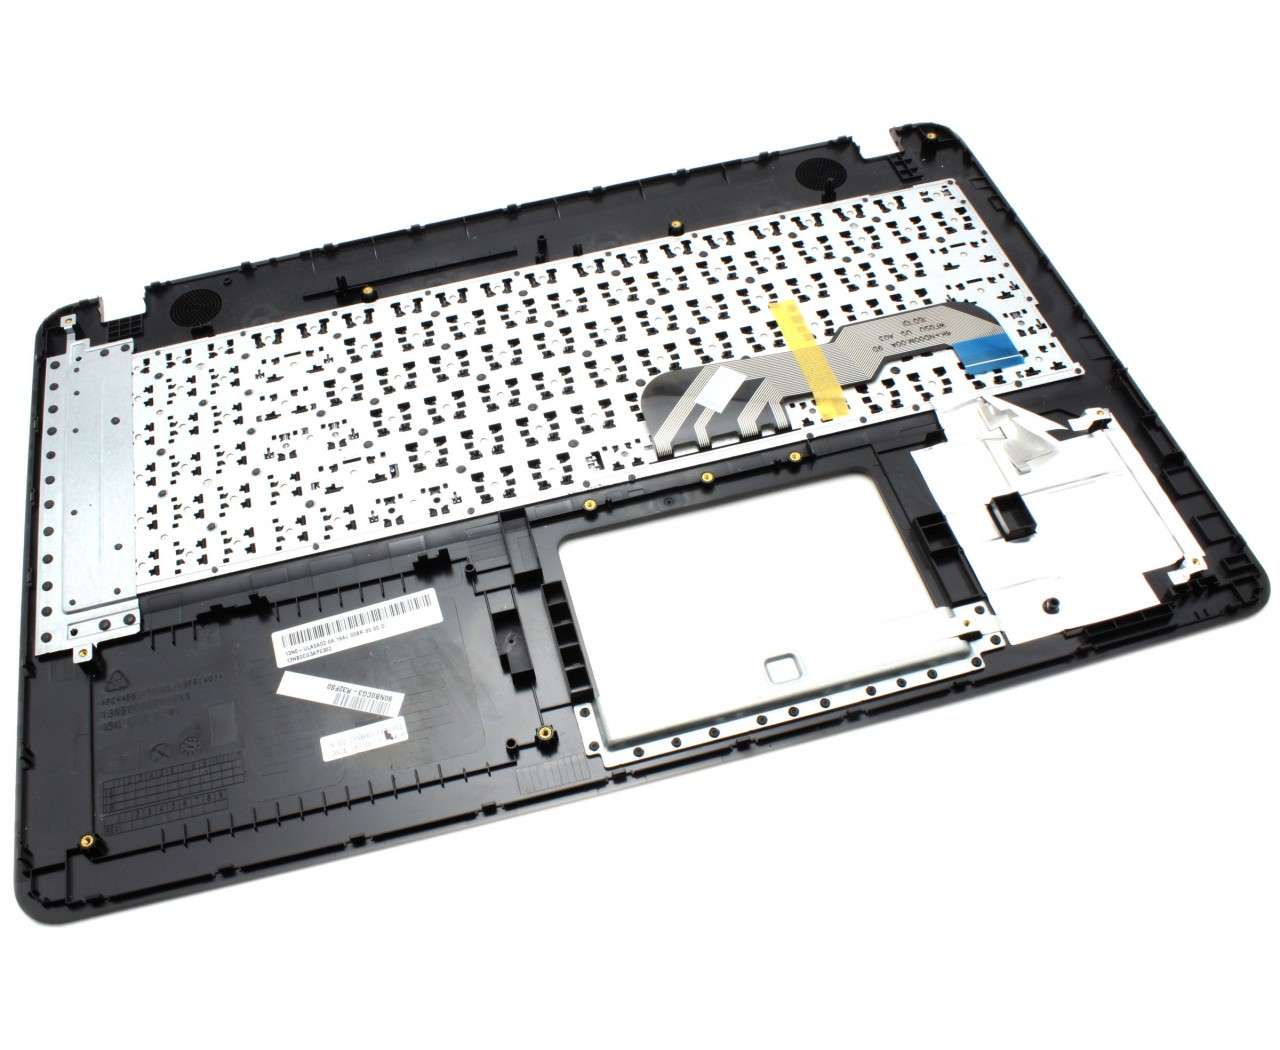 Tastatura Asus F541UV Neagra cu Palmrest Argintiu